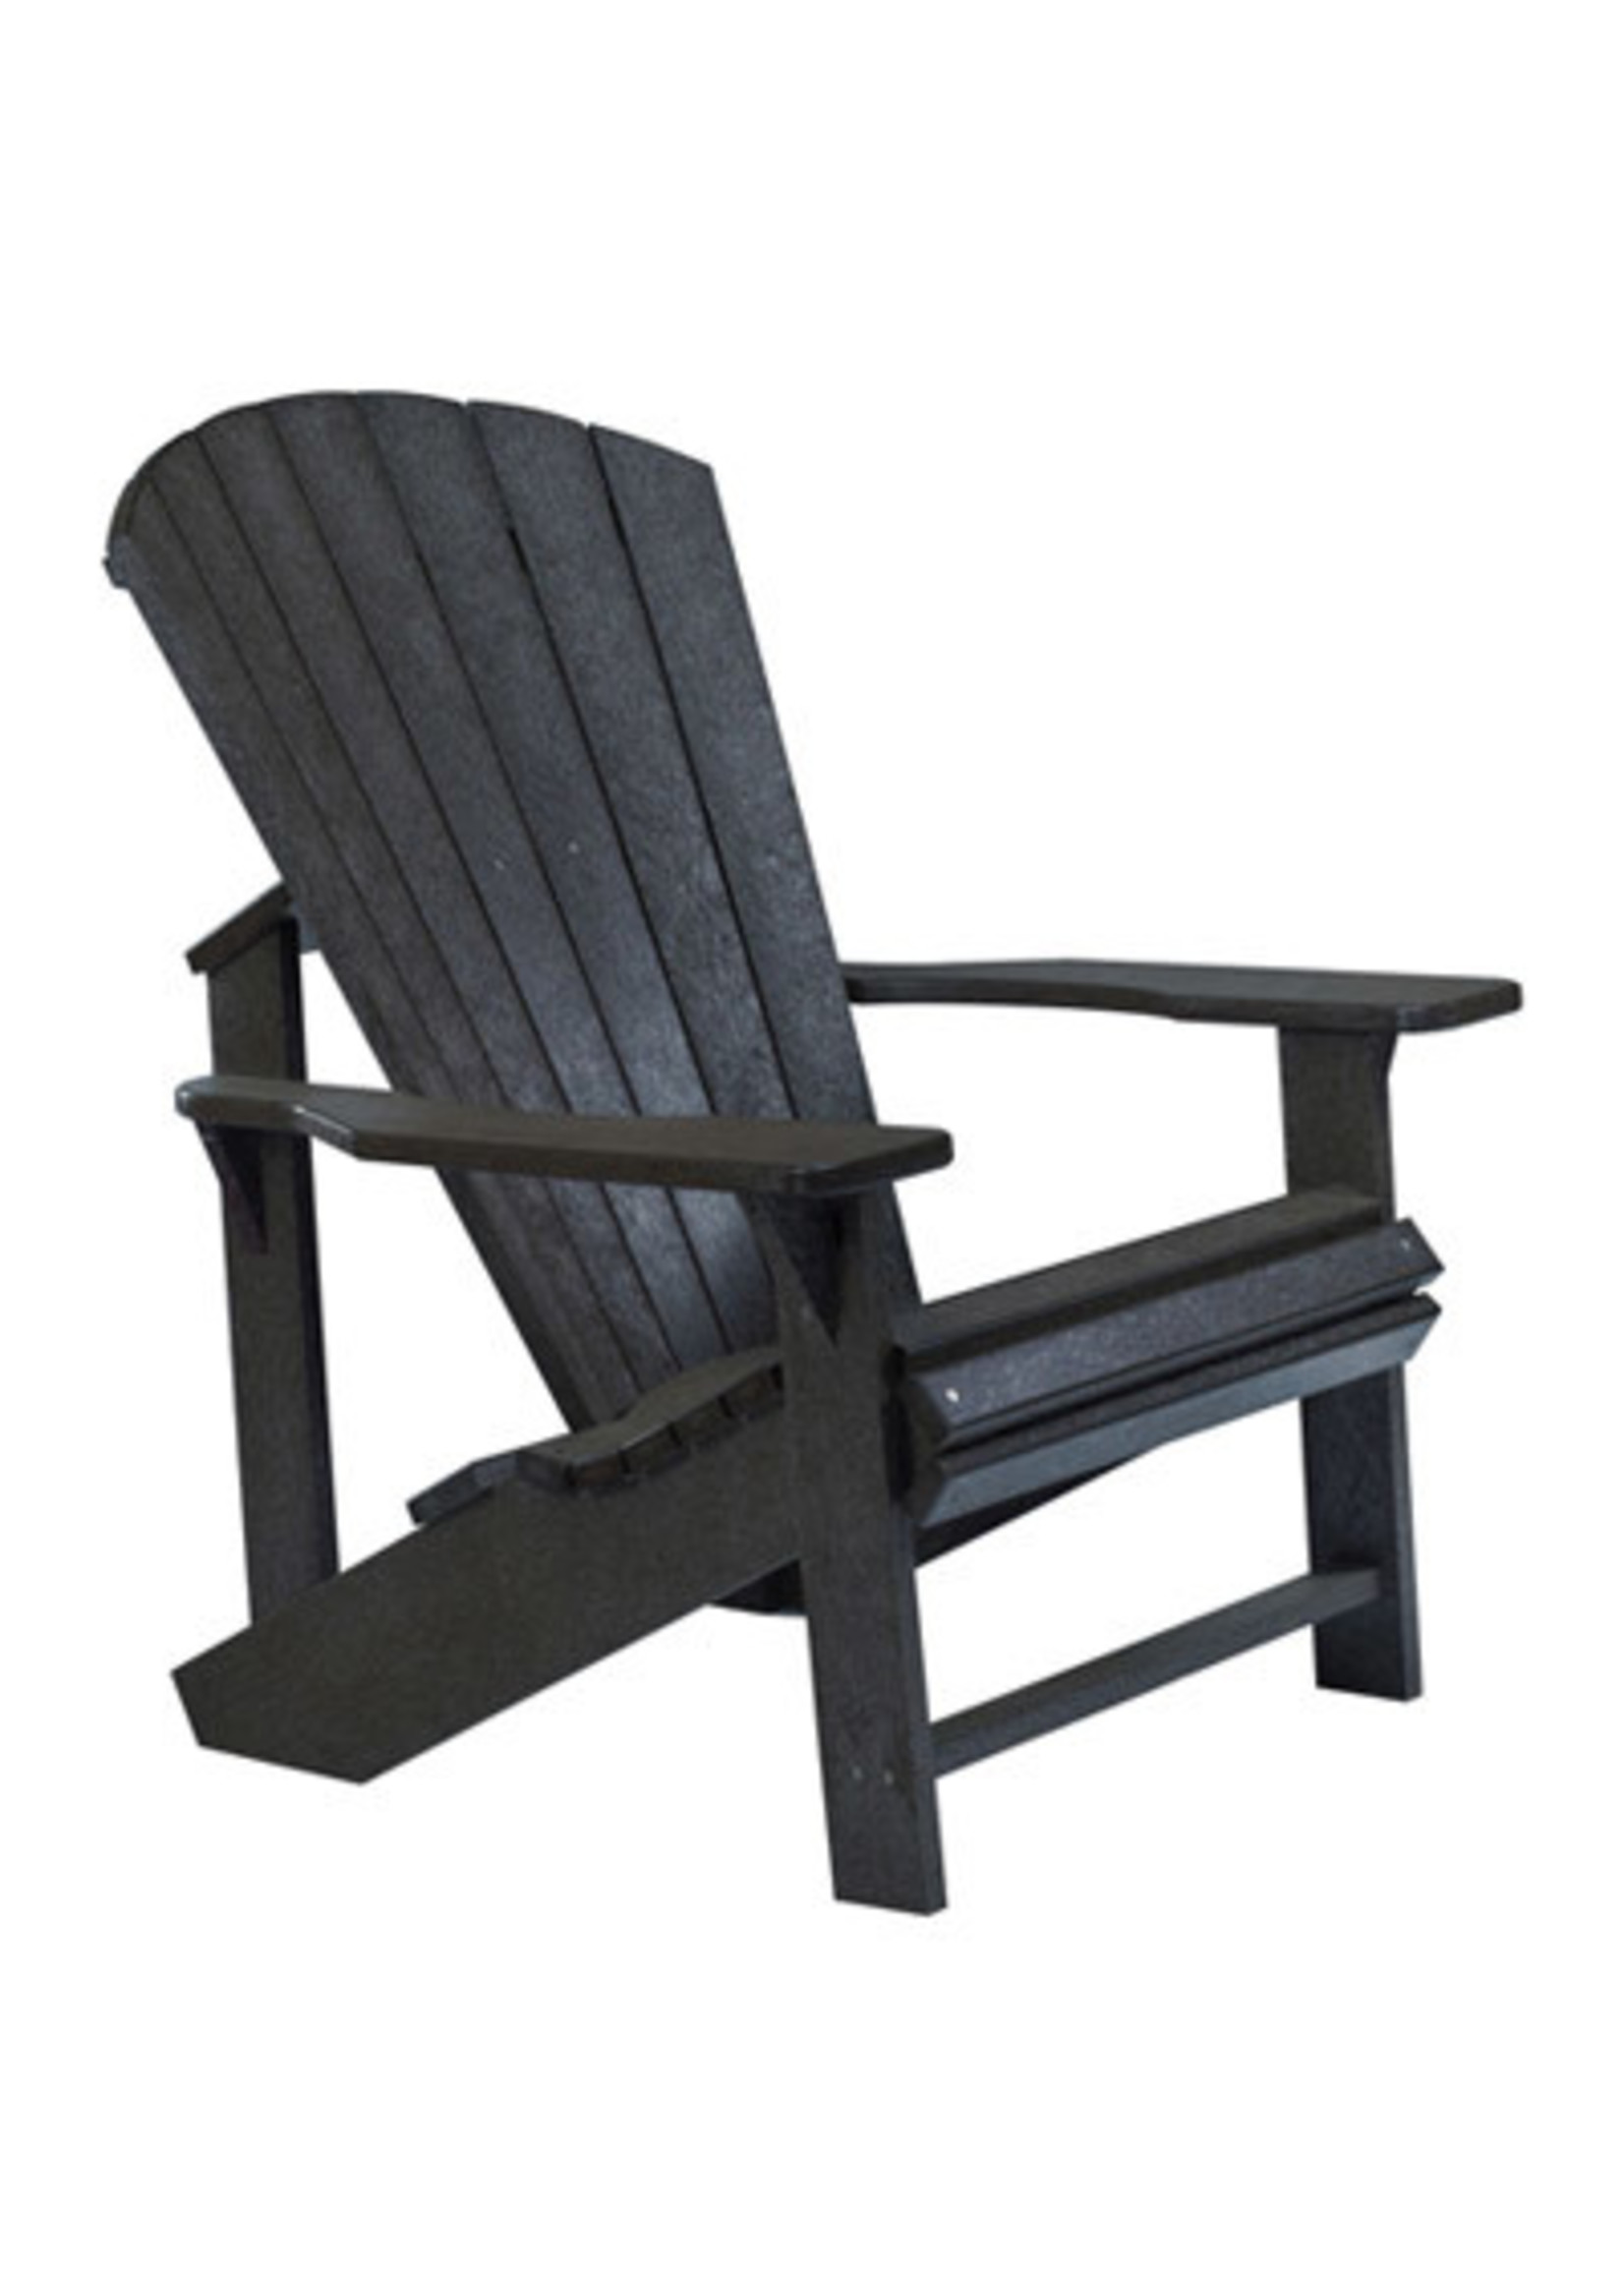 C.R. Plastic Products C01 * Classic Adirondack Chair, Generation Line